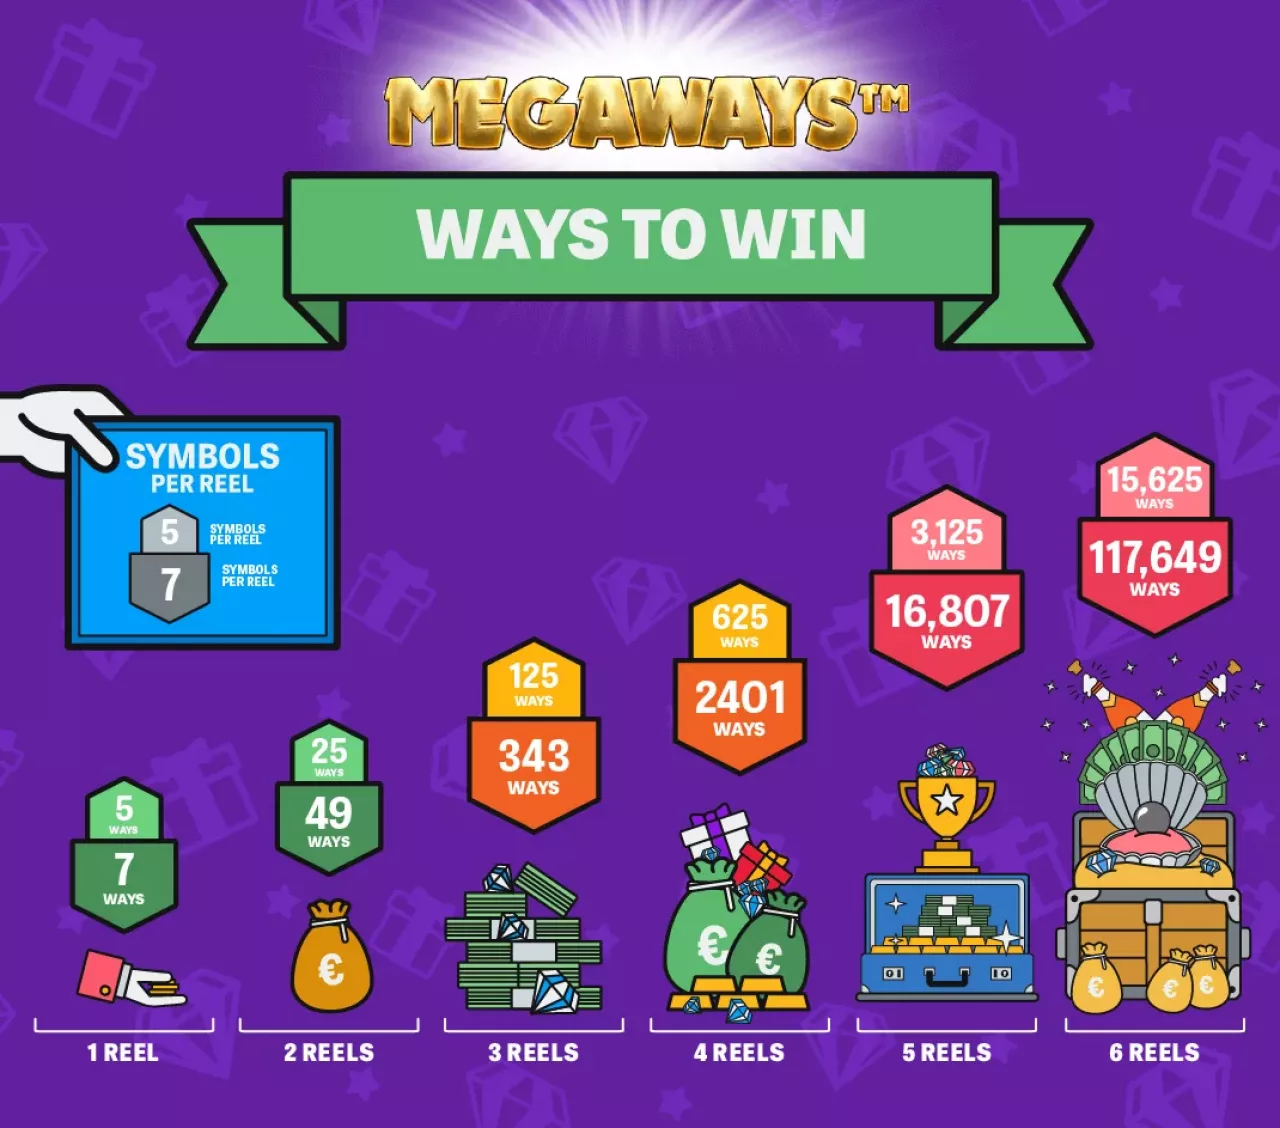 Megaways slots infographic - ways to win on megaways slots